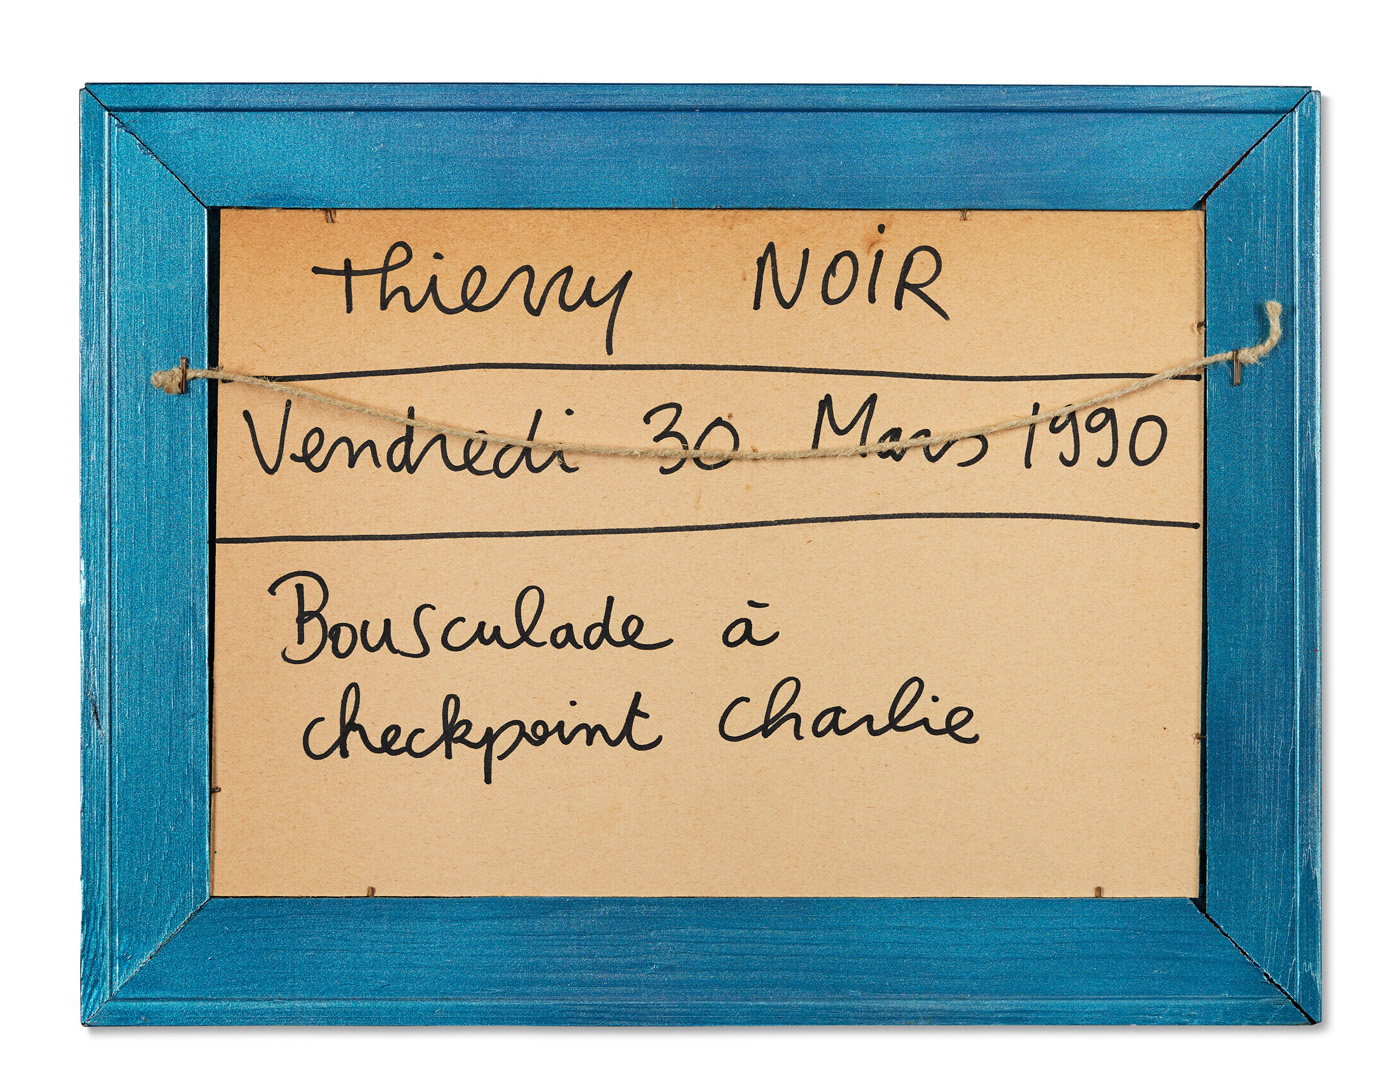 Thierry Noir - Bousculades à checkpoint Charlie (verso)